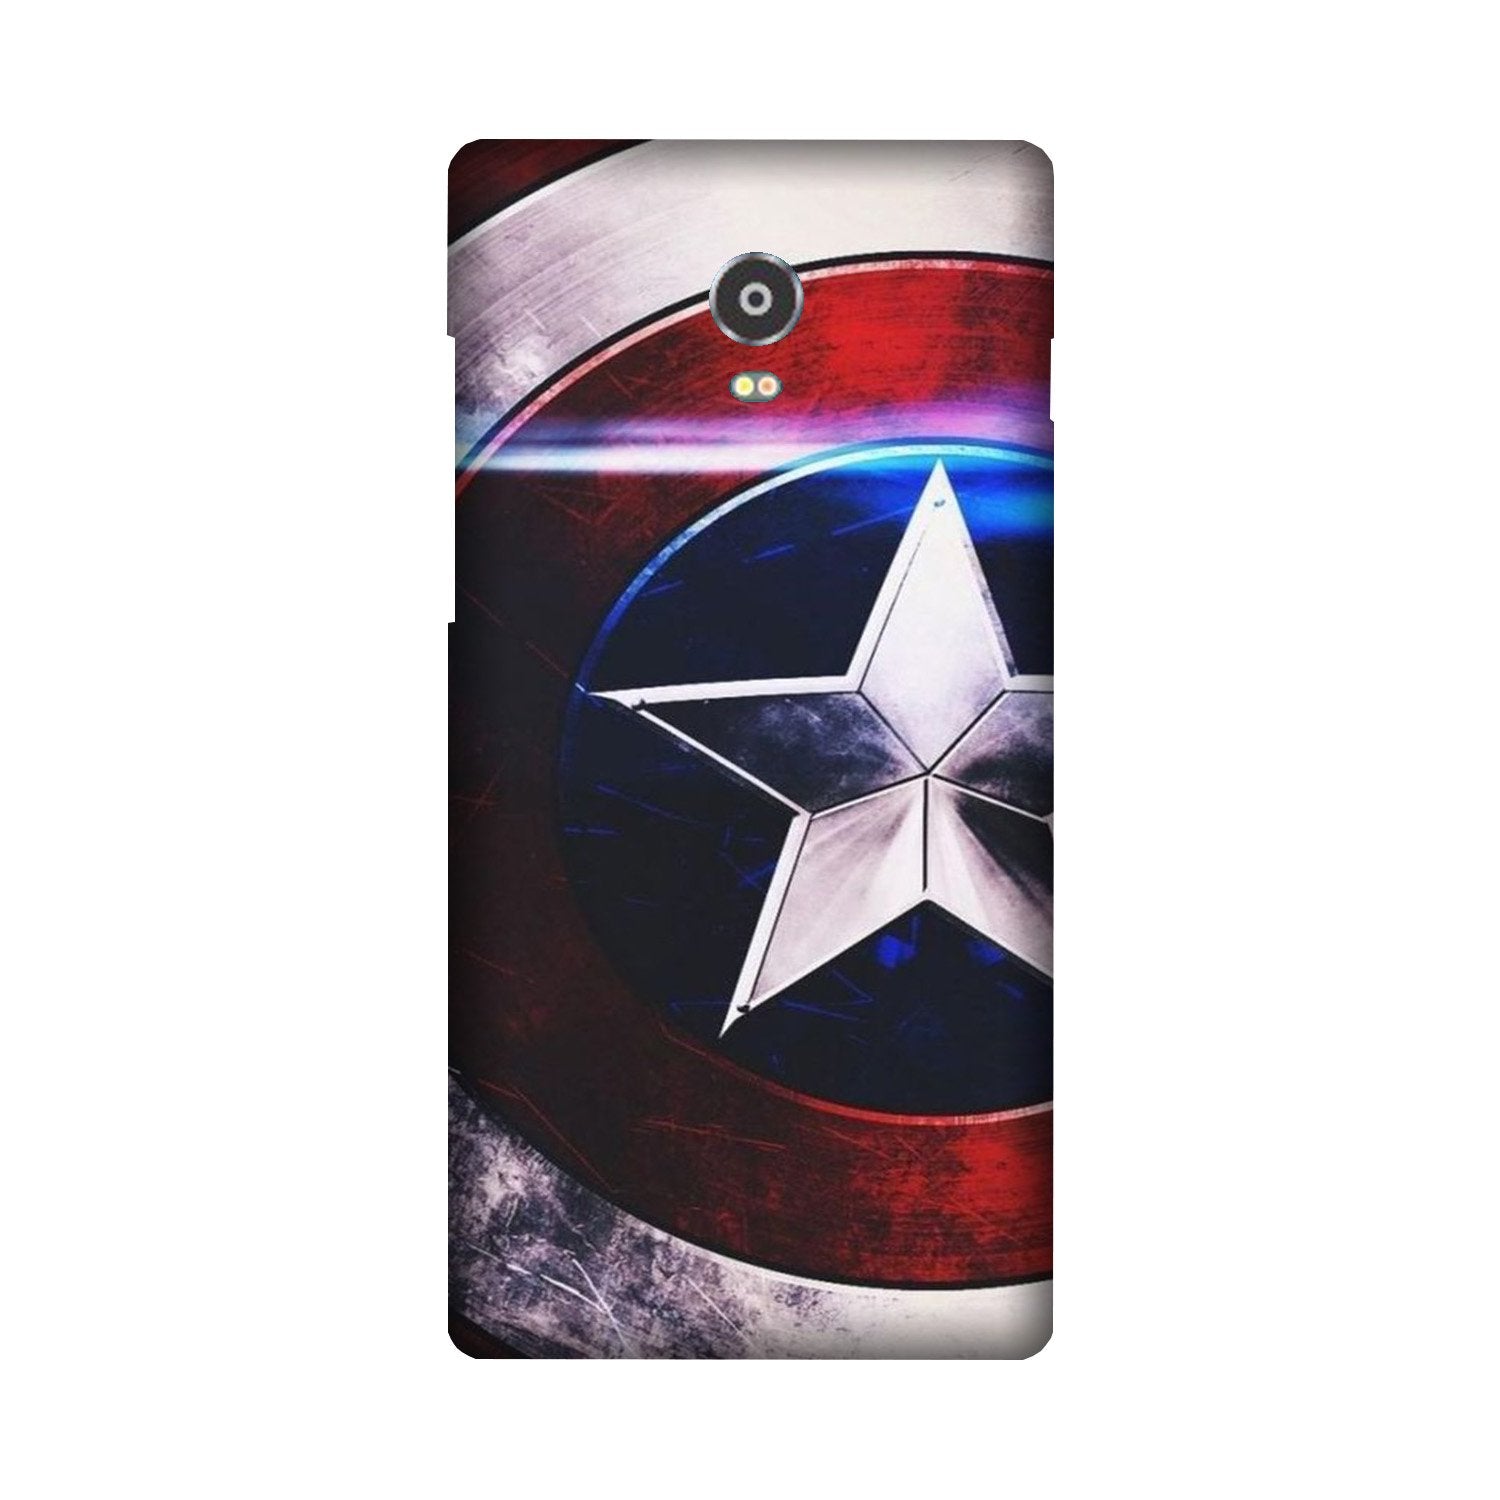 Captain America Shield Case for Lenovo Vibe P1 (Design No. 250)